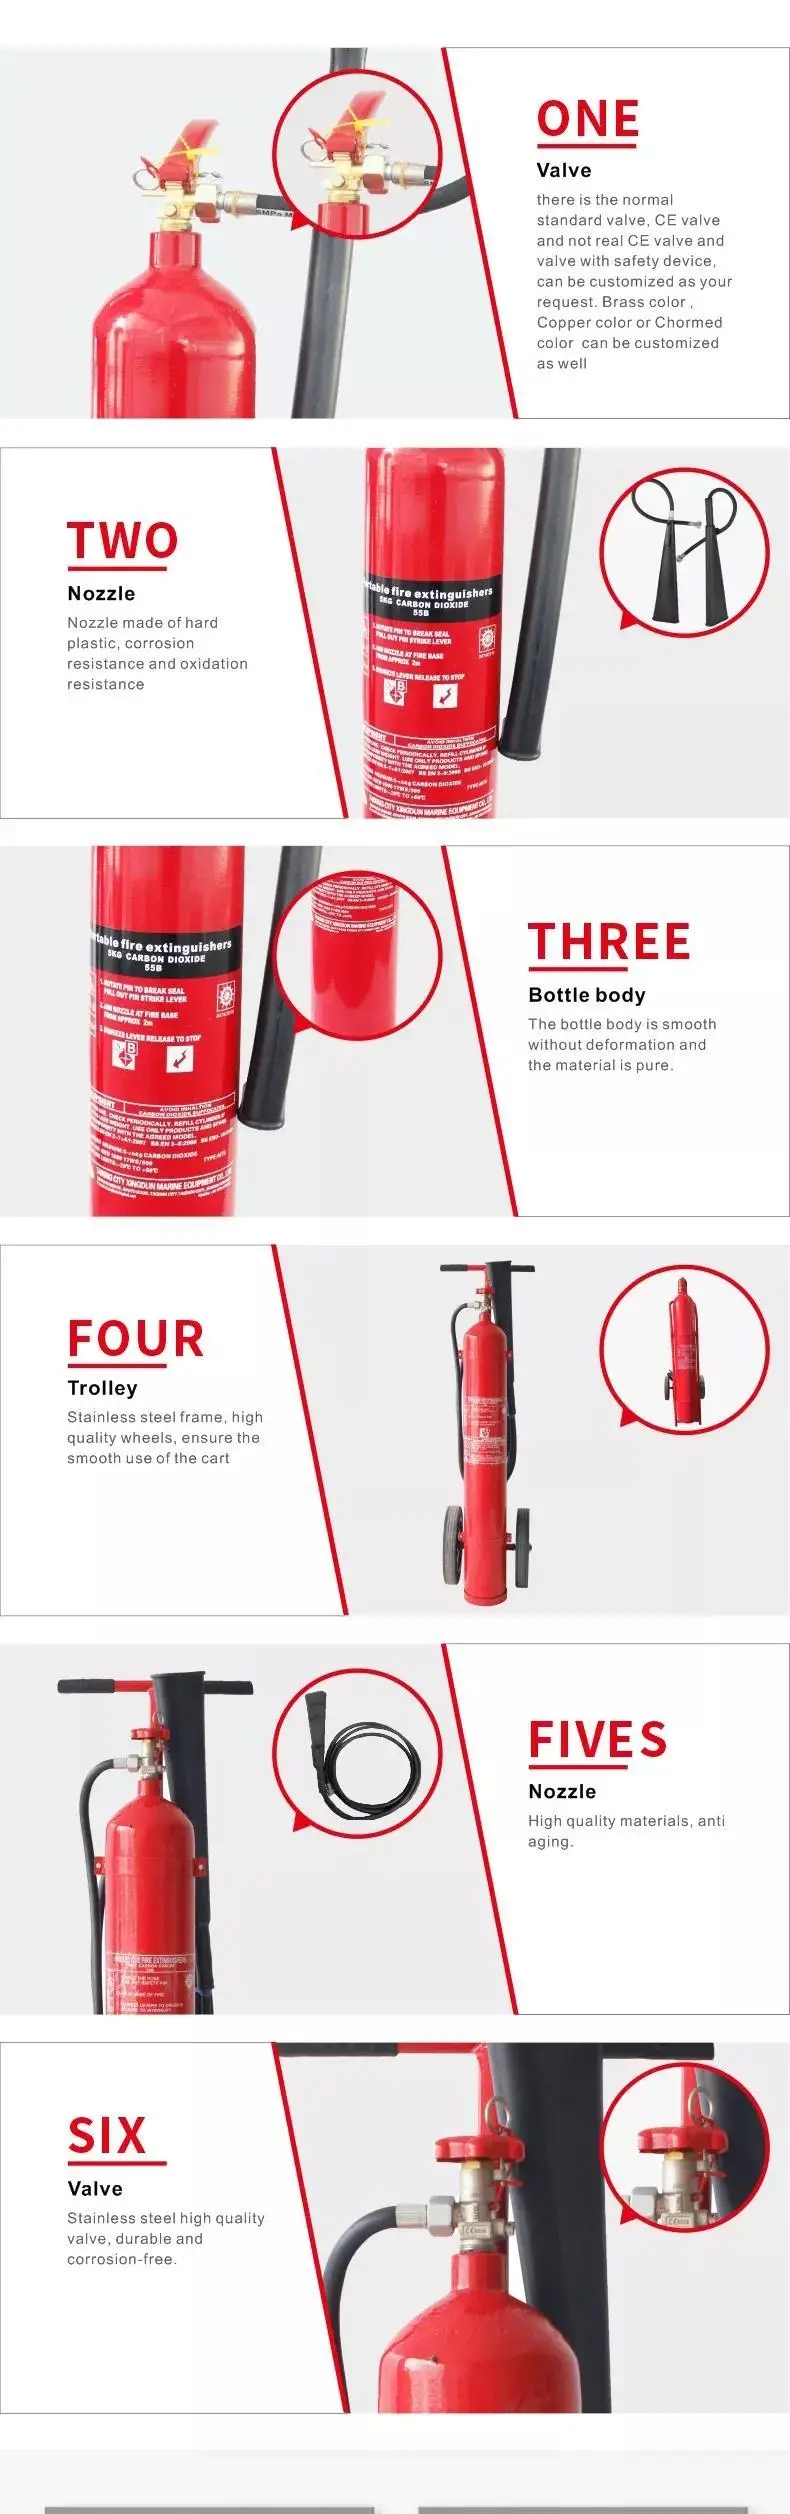 co2 fire extinguisher.jpg